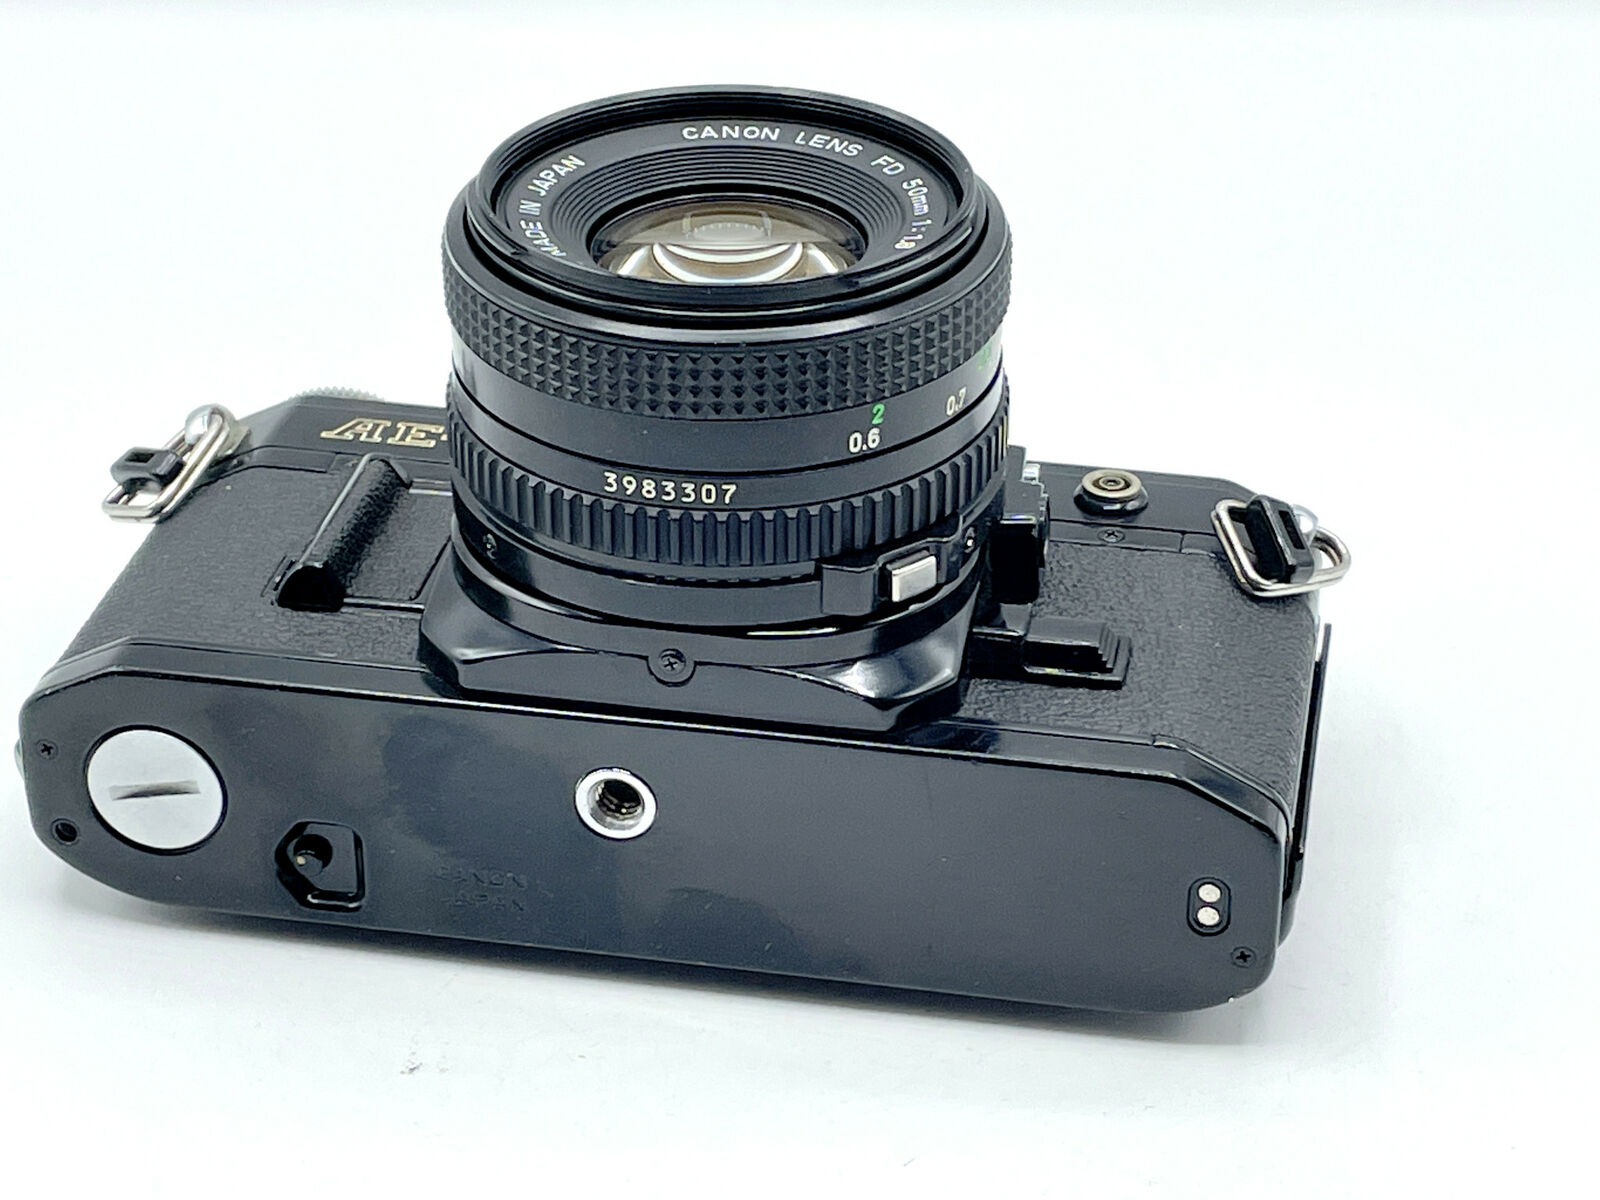 Black Canon AE-1 AE1 + 50mm Lens Manual Focus Kit - Rare Beauty - Very Nice!